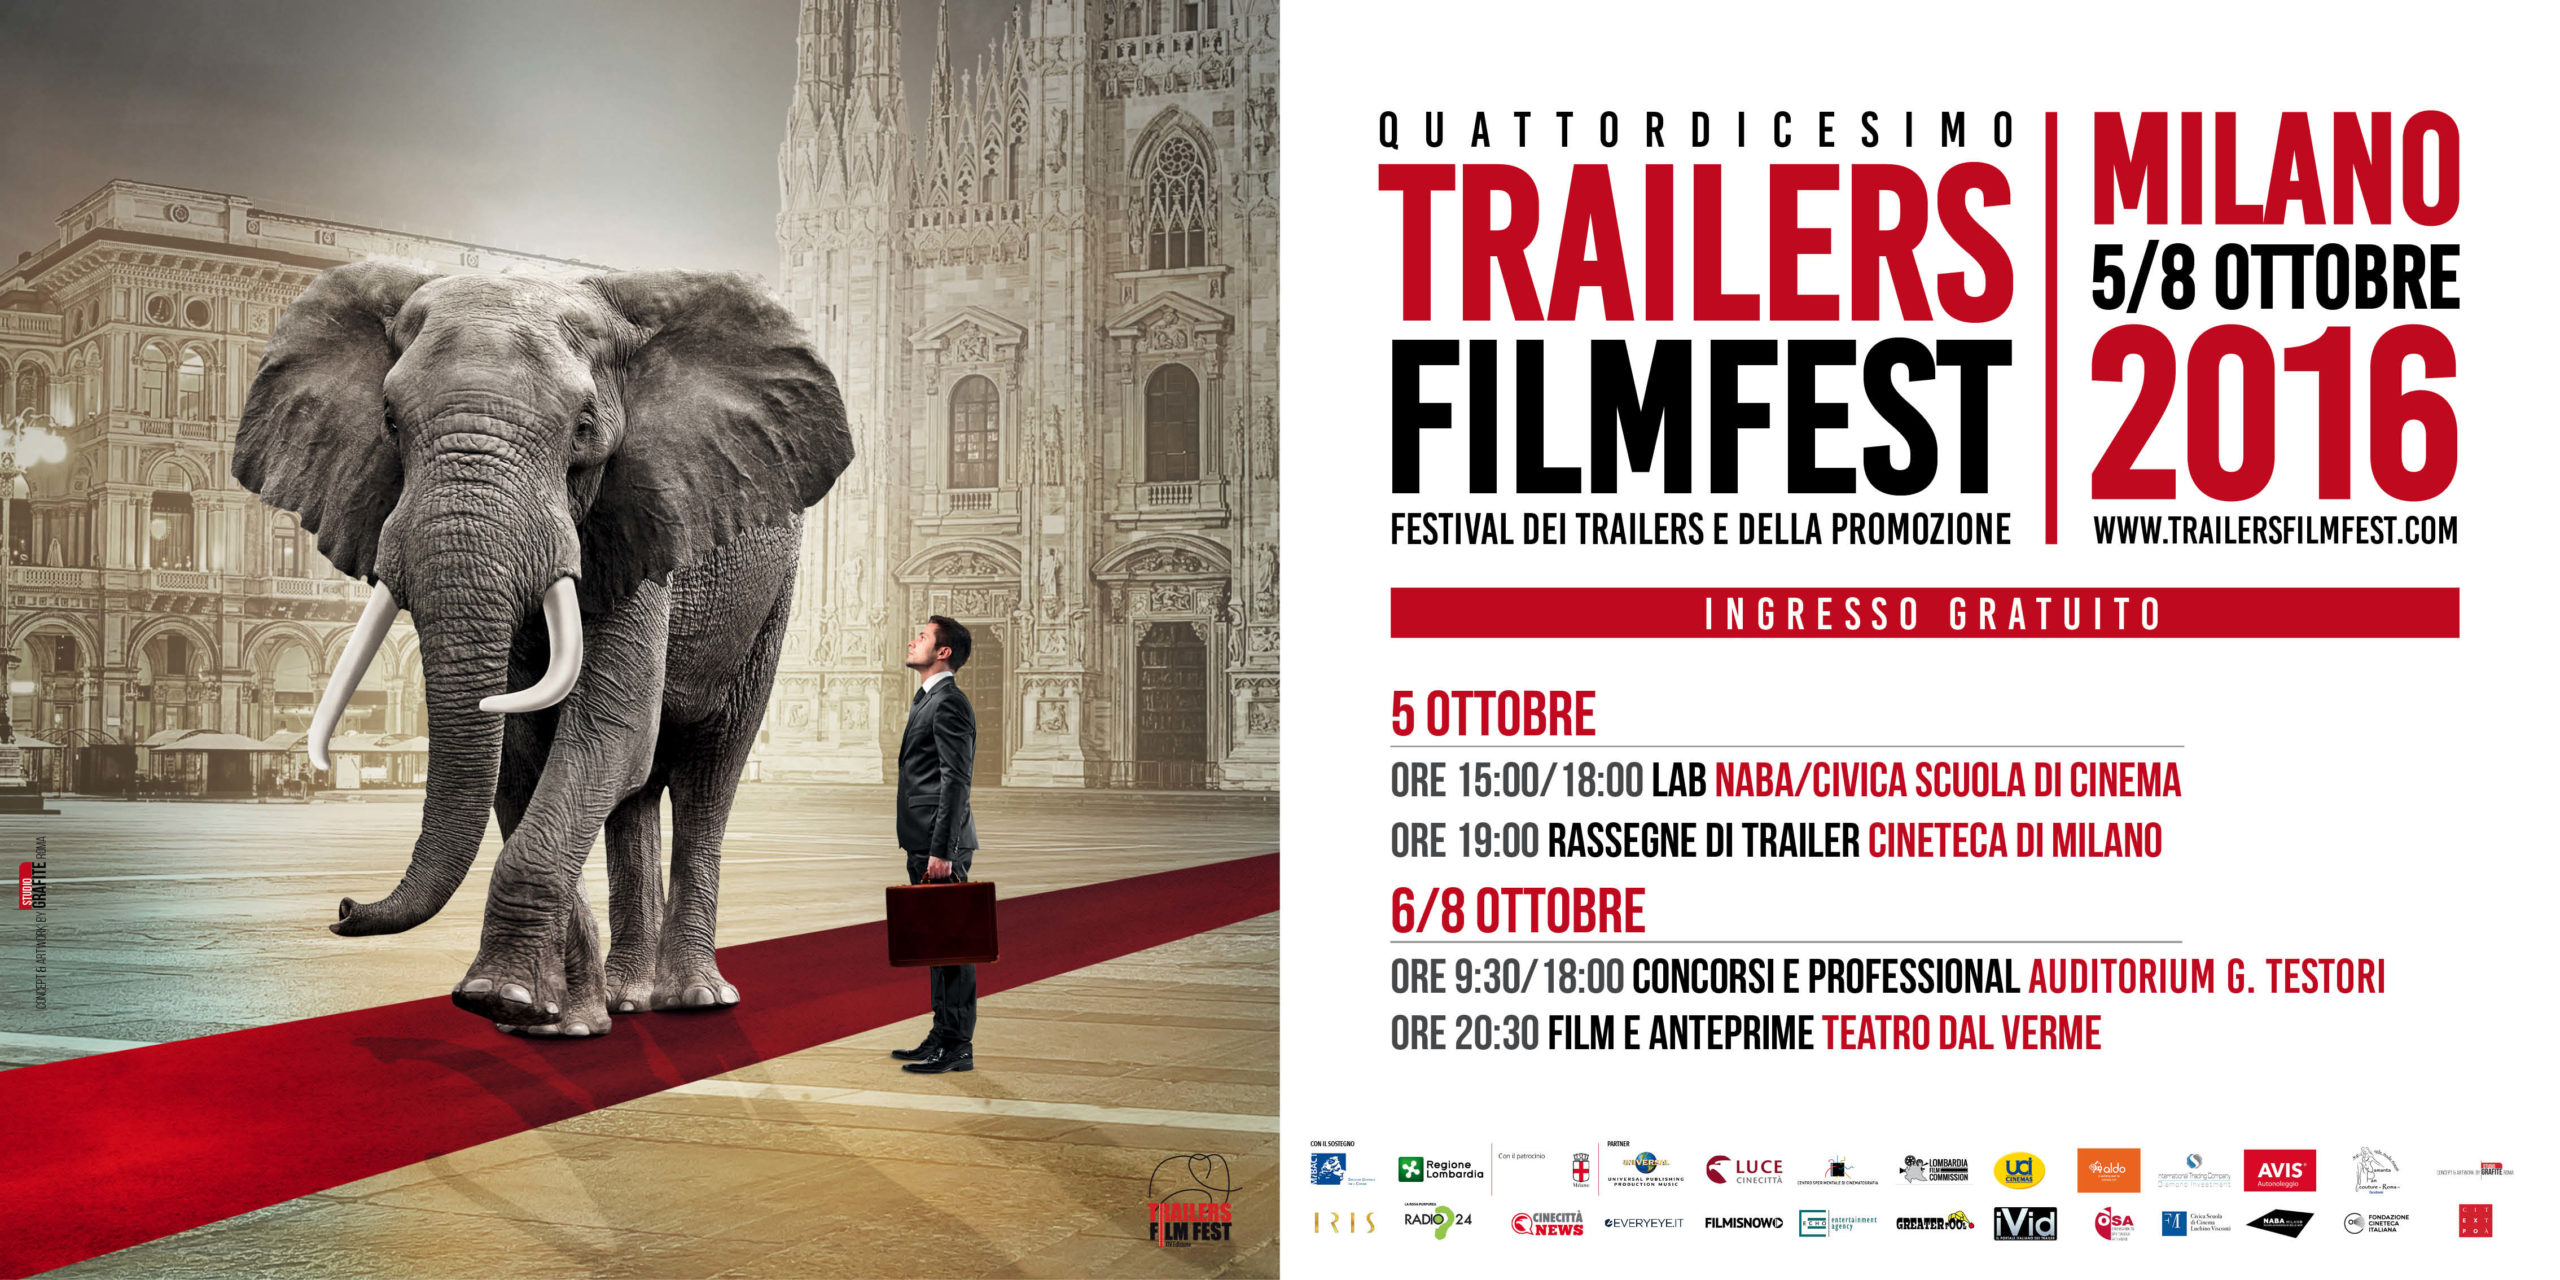 TrailersFilmFest2016orizzontale